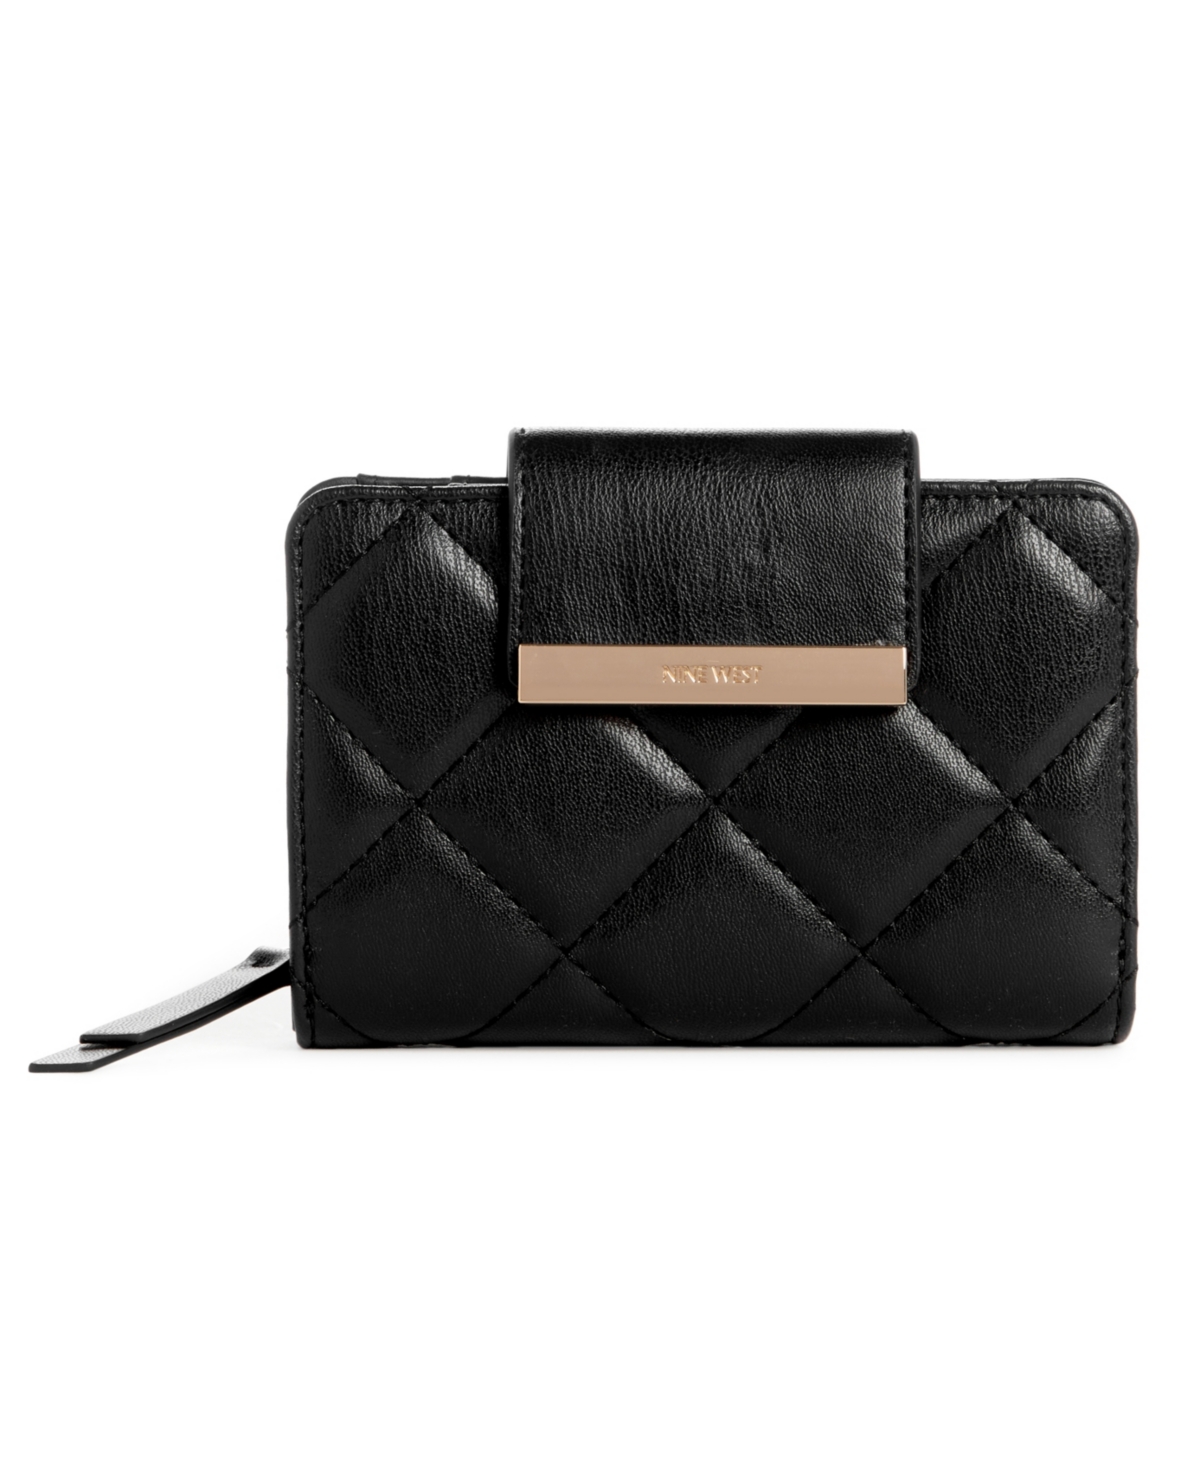 Mirabella French wallet - Black